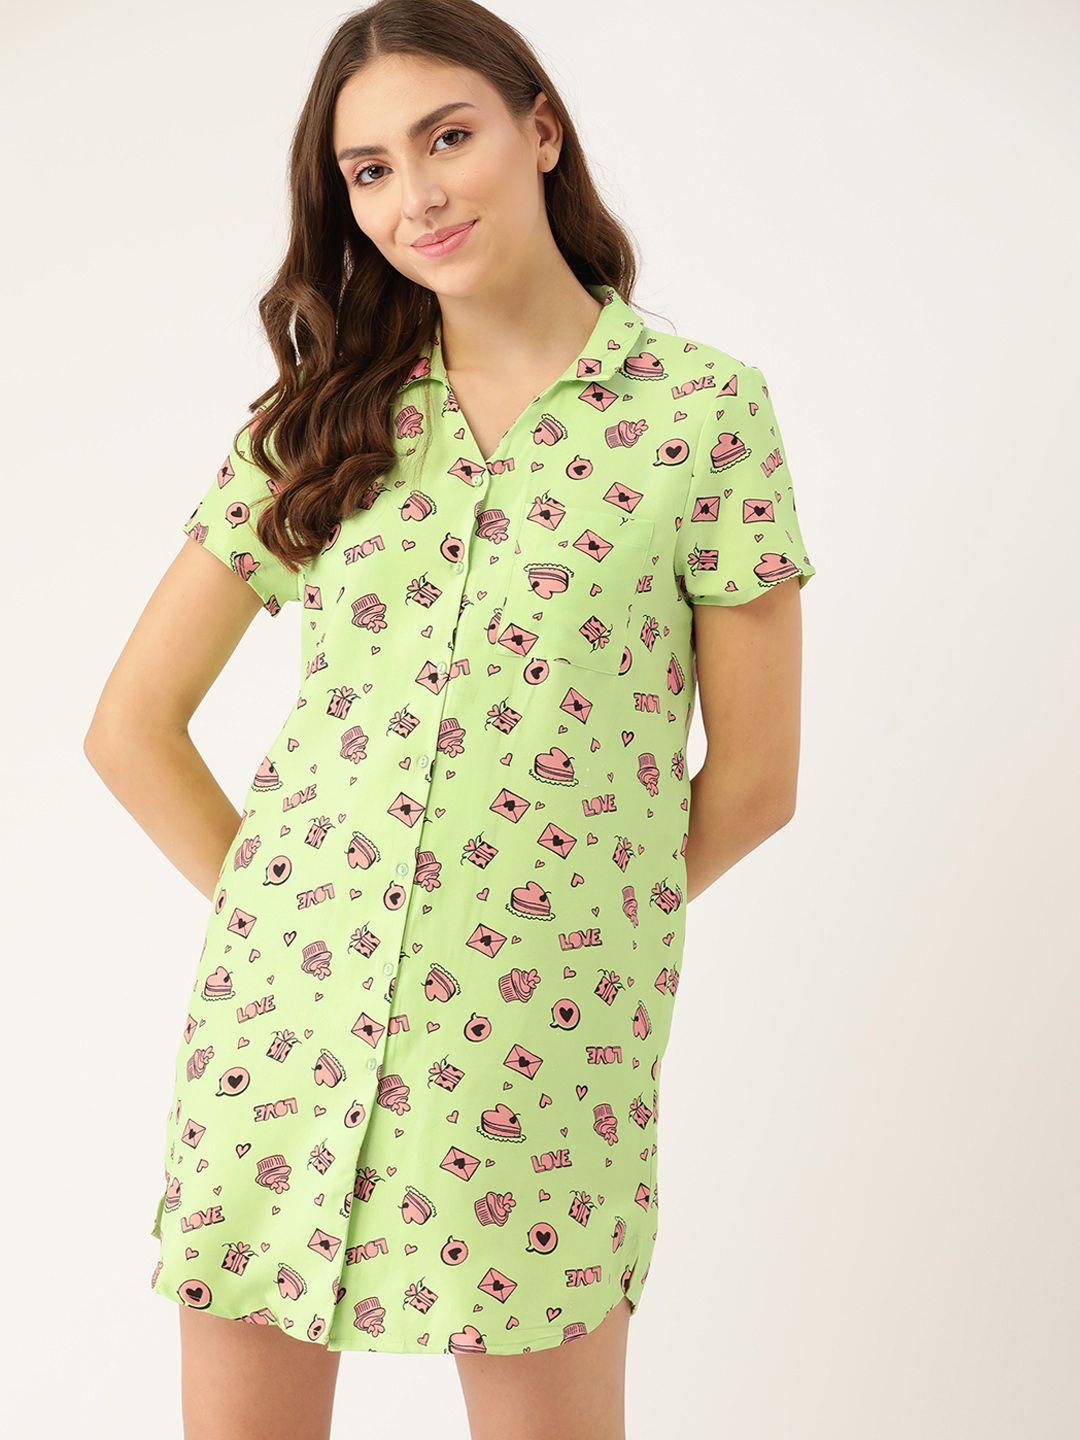 dressberry green conversational printed nightdress